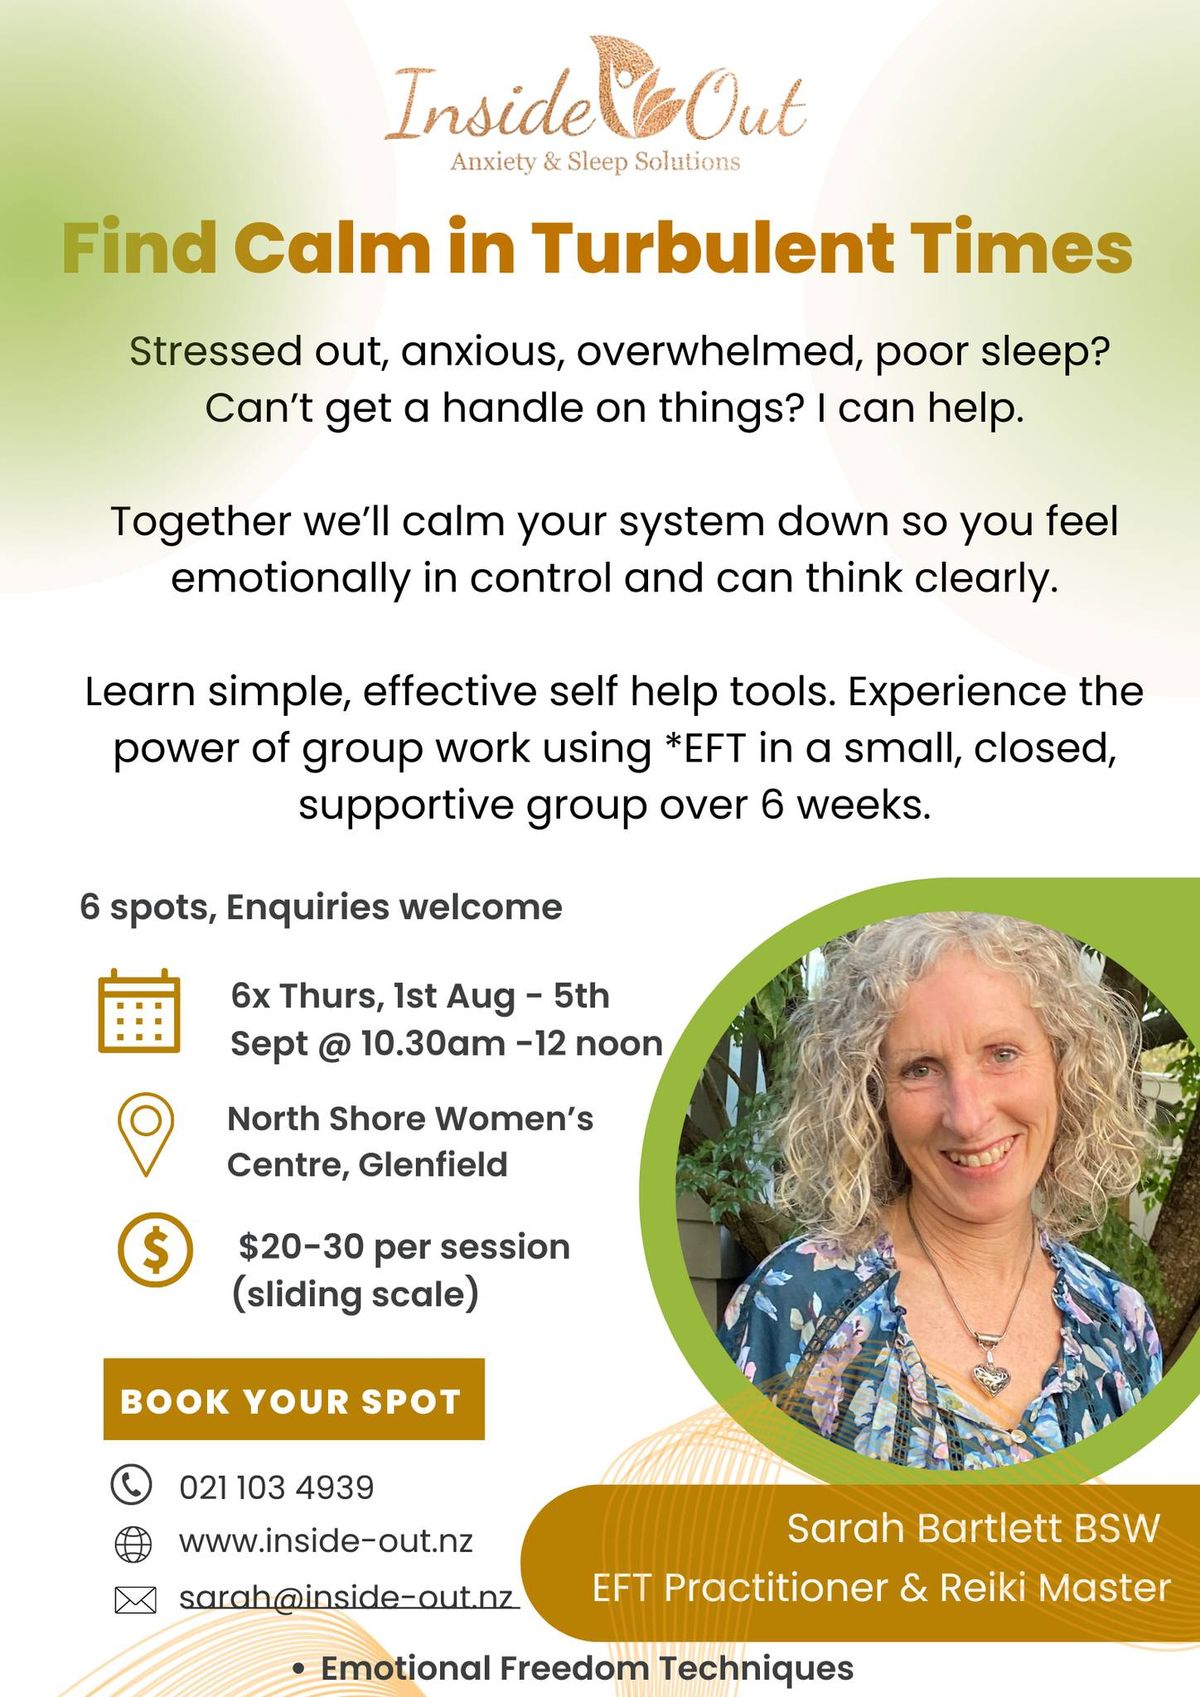 Find Calm in Turbulent Times workshop series